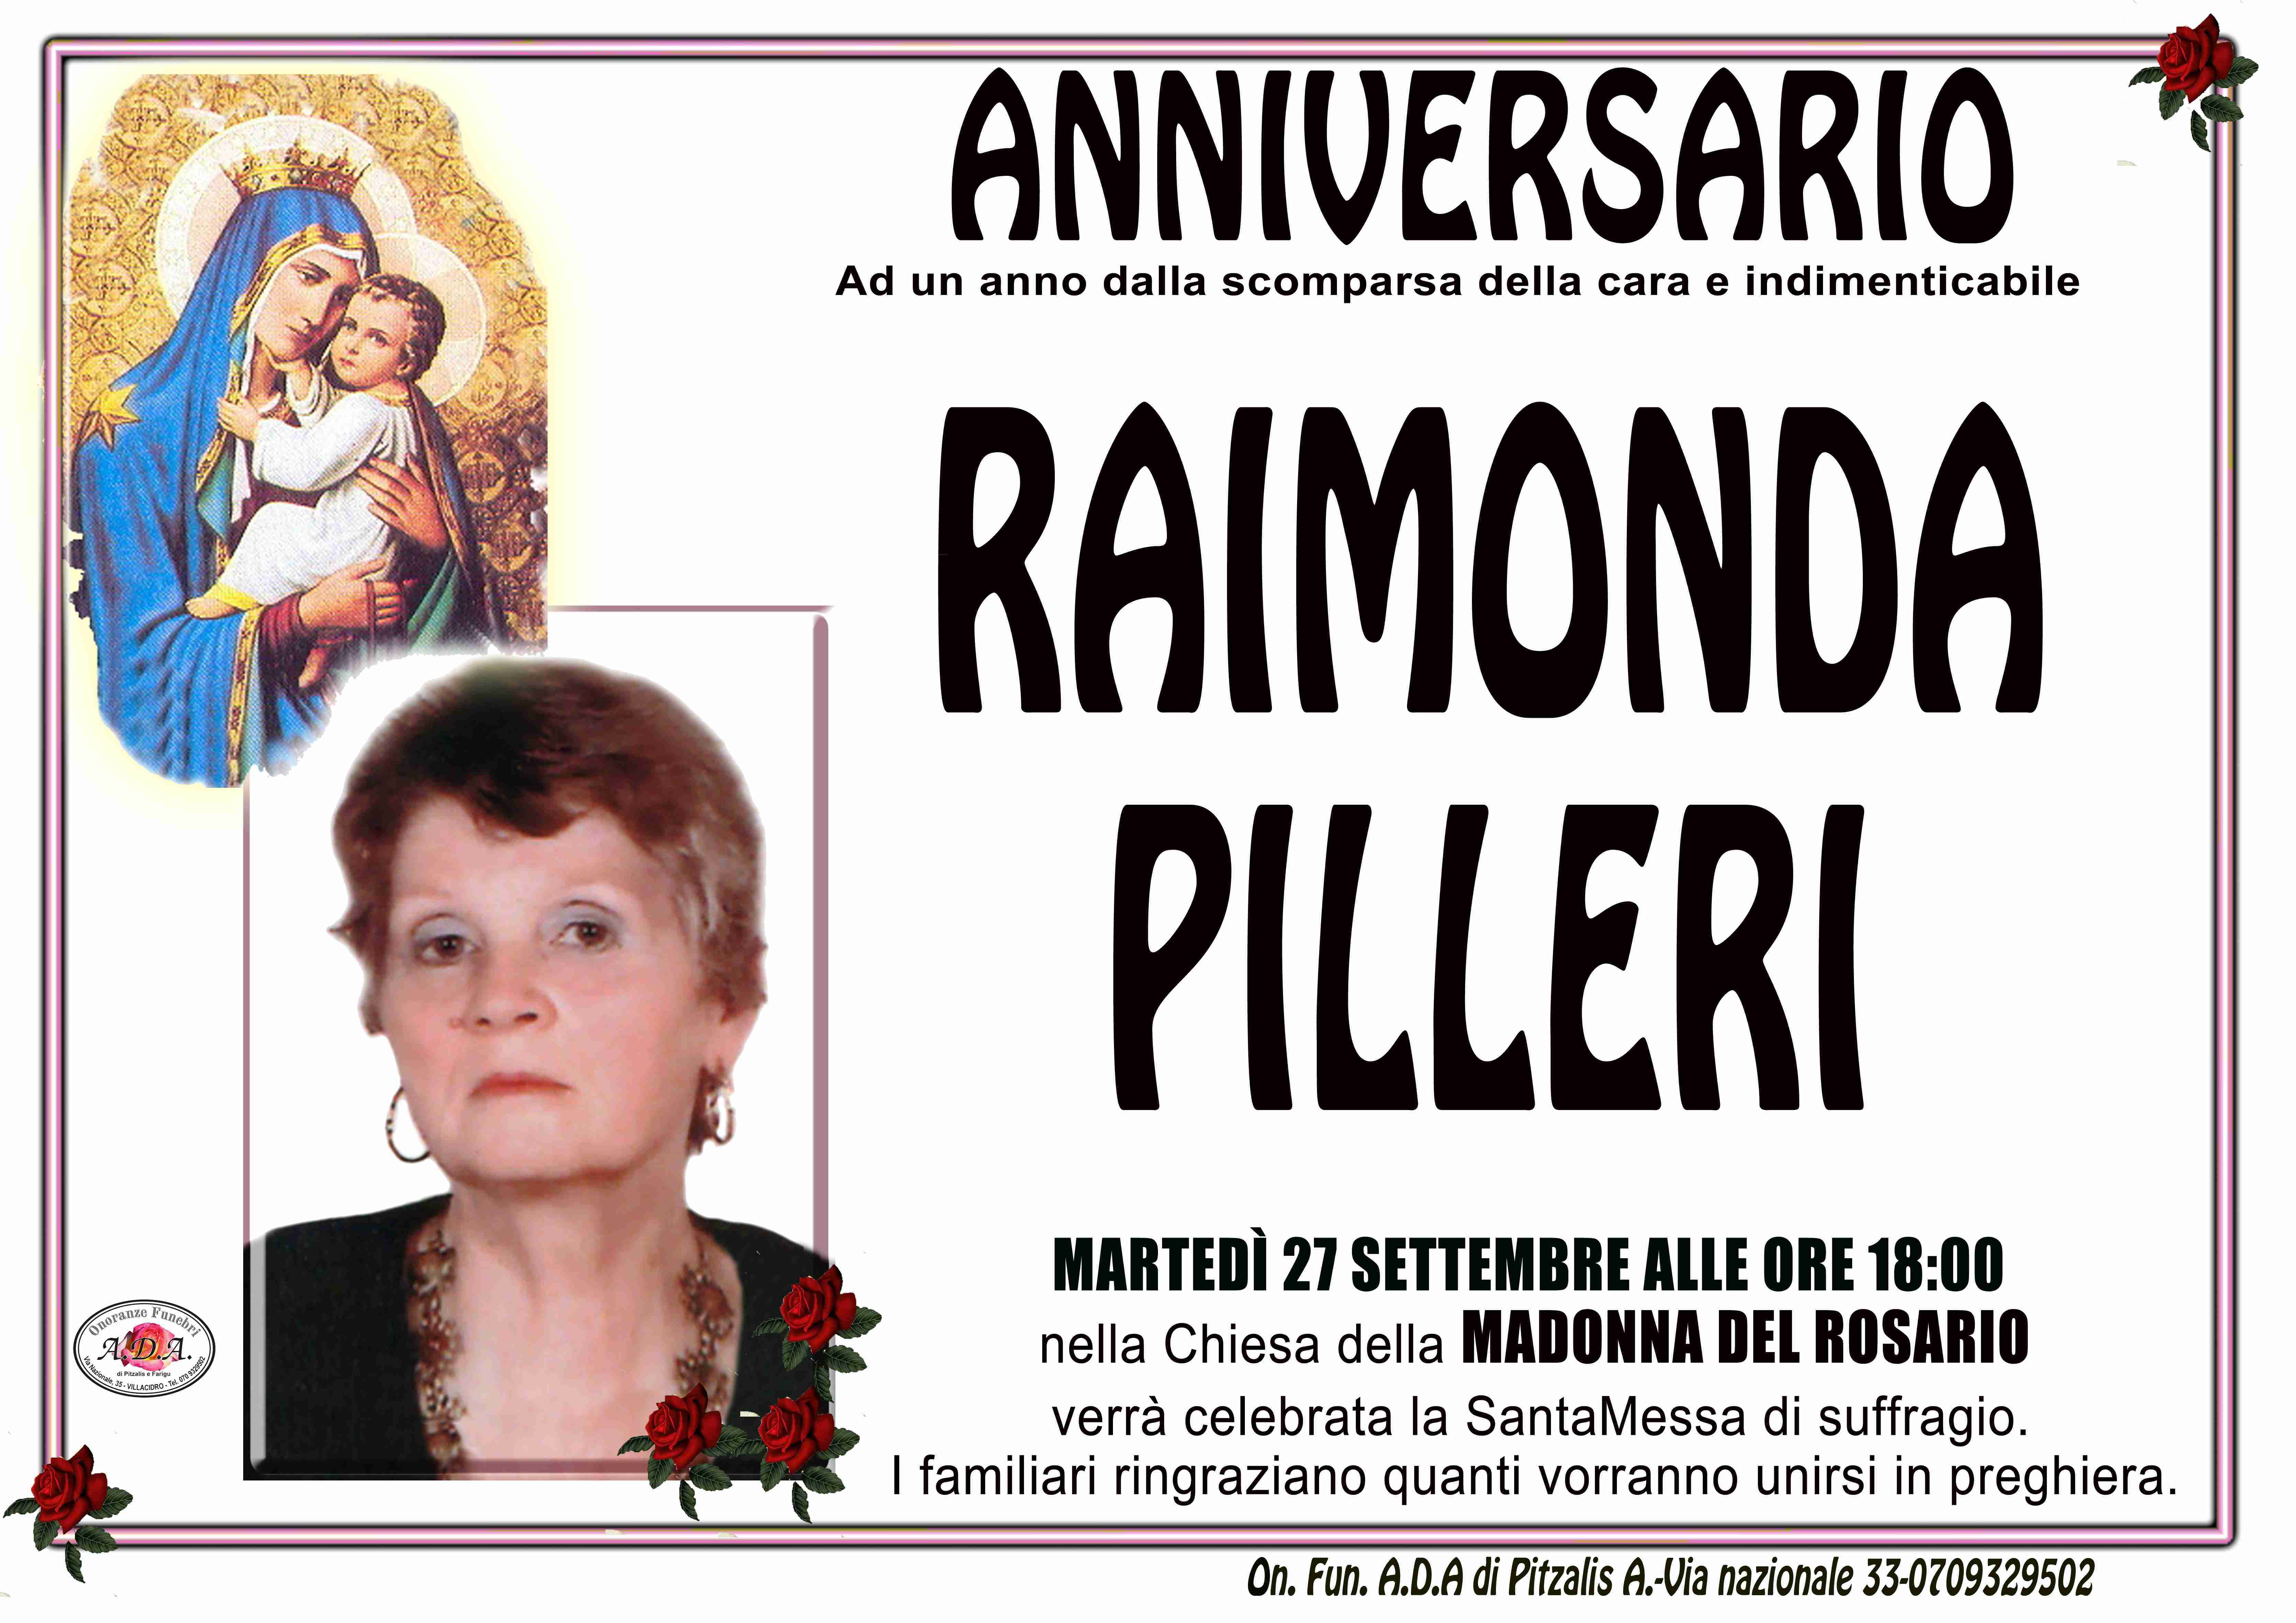 Raimonda Pilleri